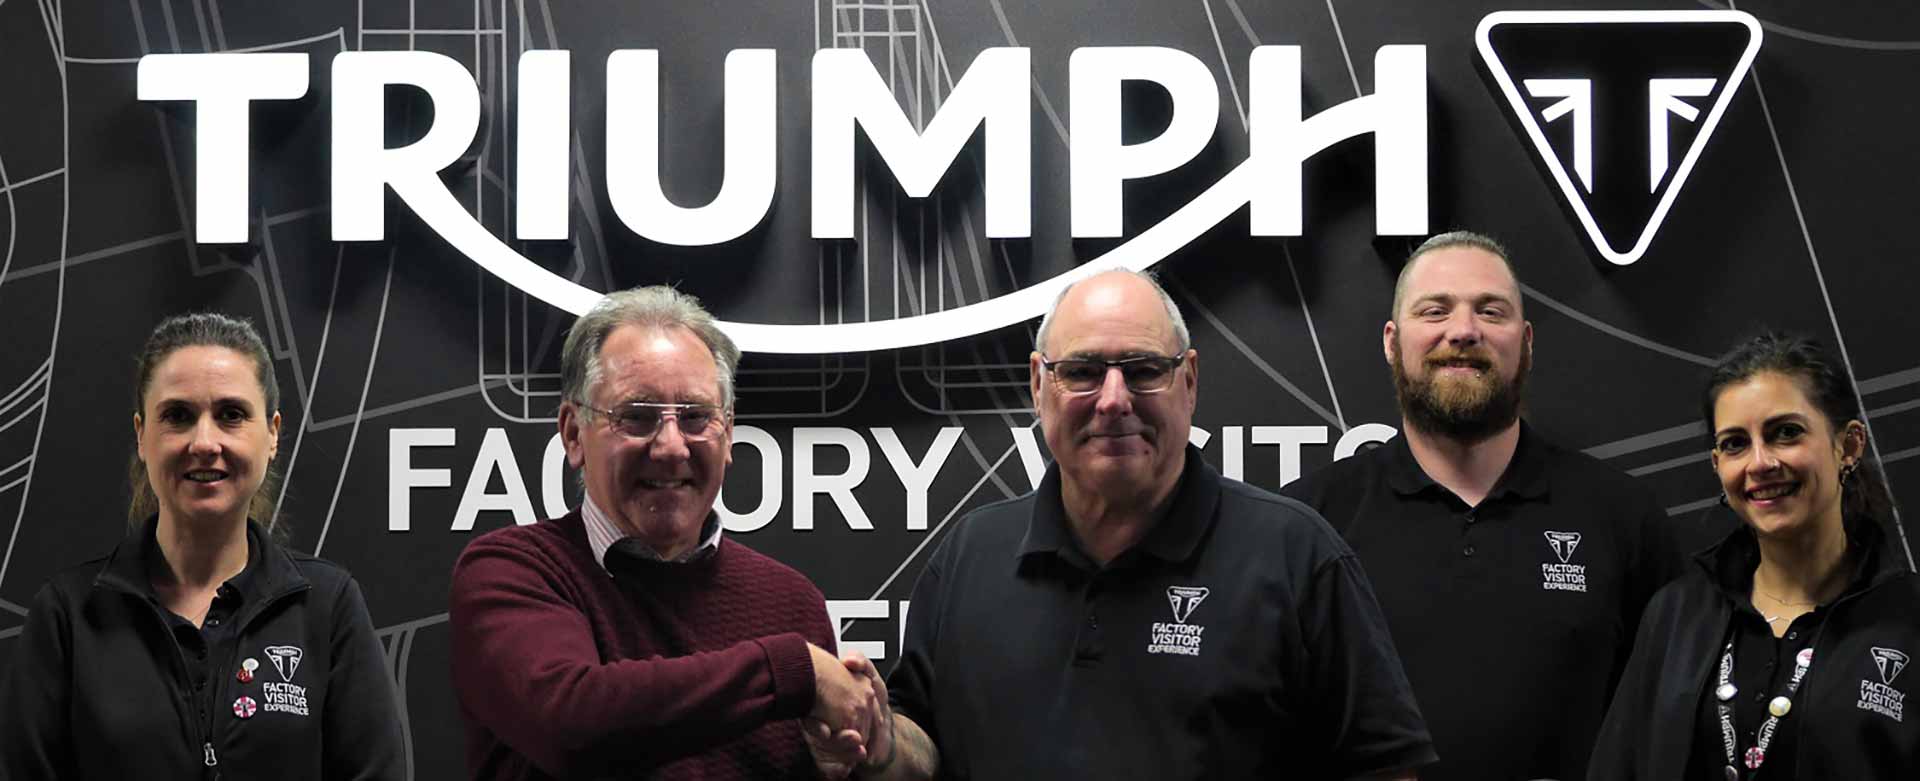 Triumph Factory Visitor Experience Guest Mr Ron Sutton